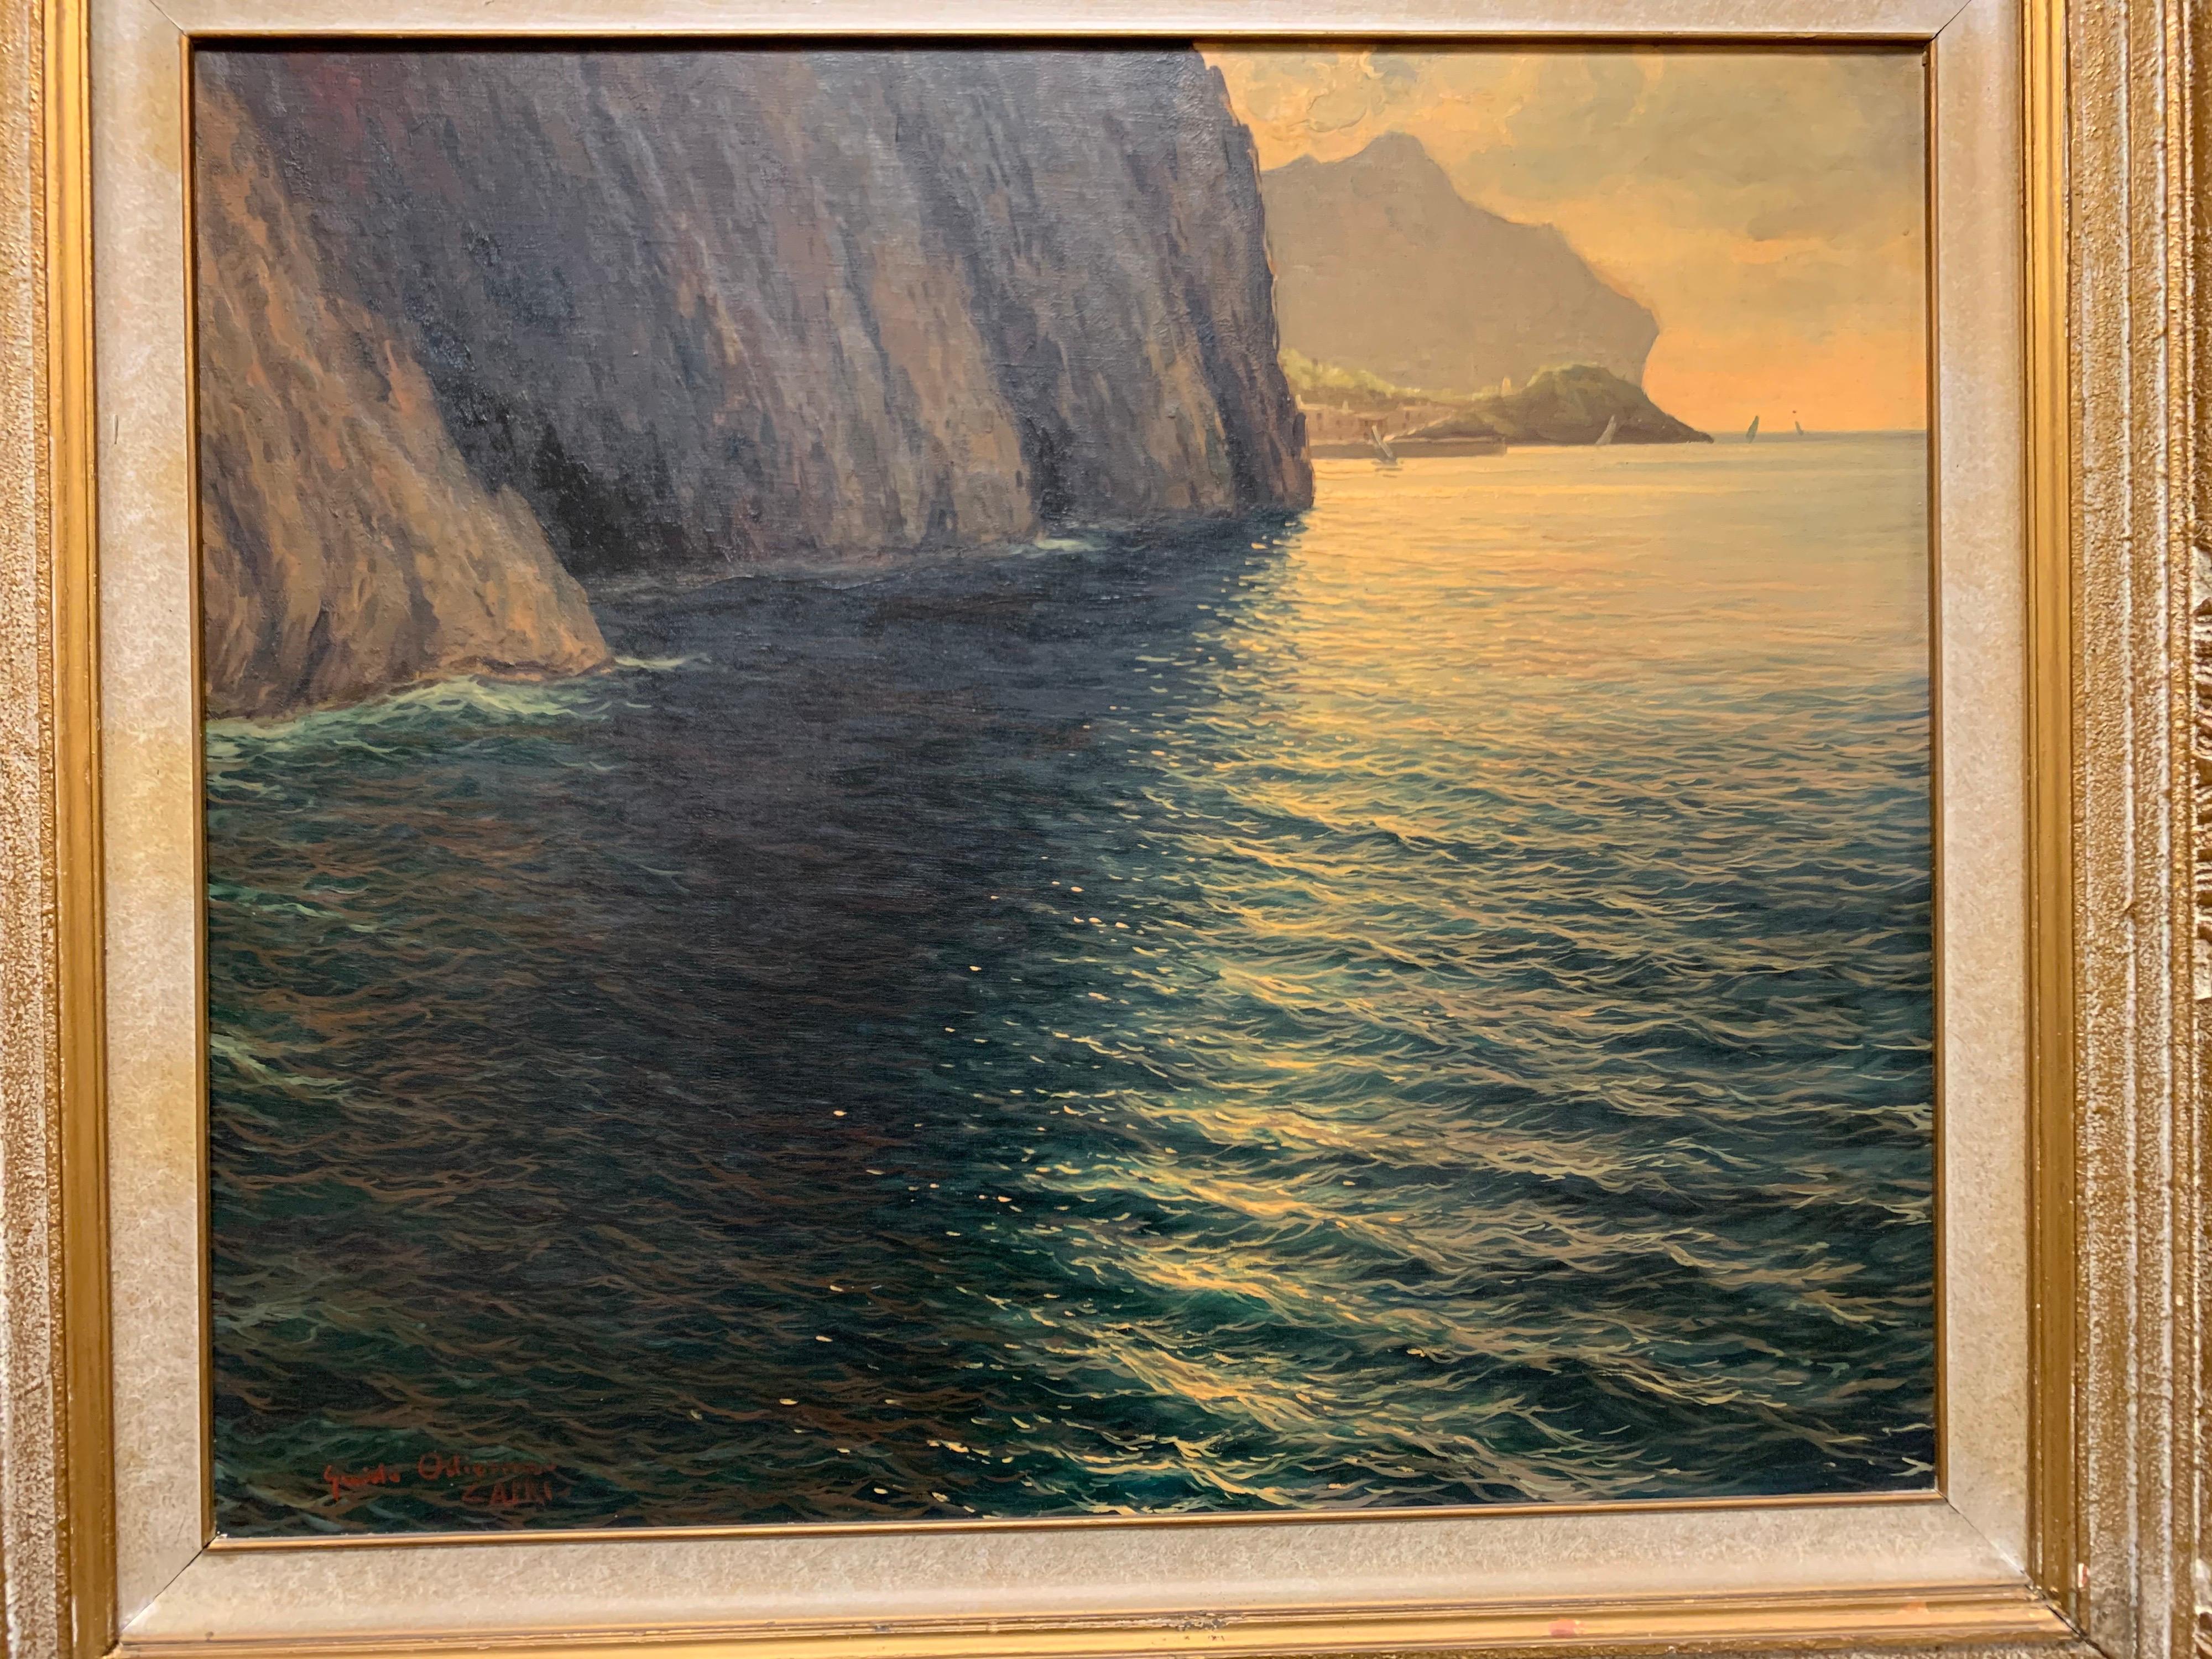 Original Signed Guido Odierna “Capri” Oil on Canvas Seascape 10